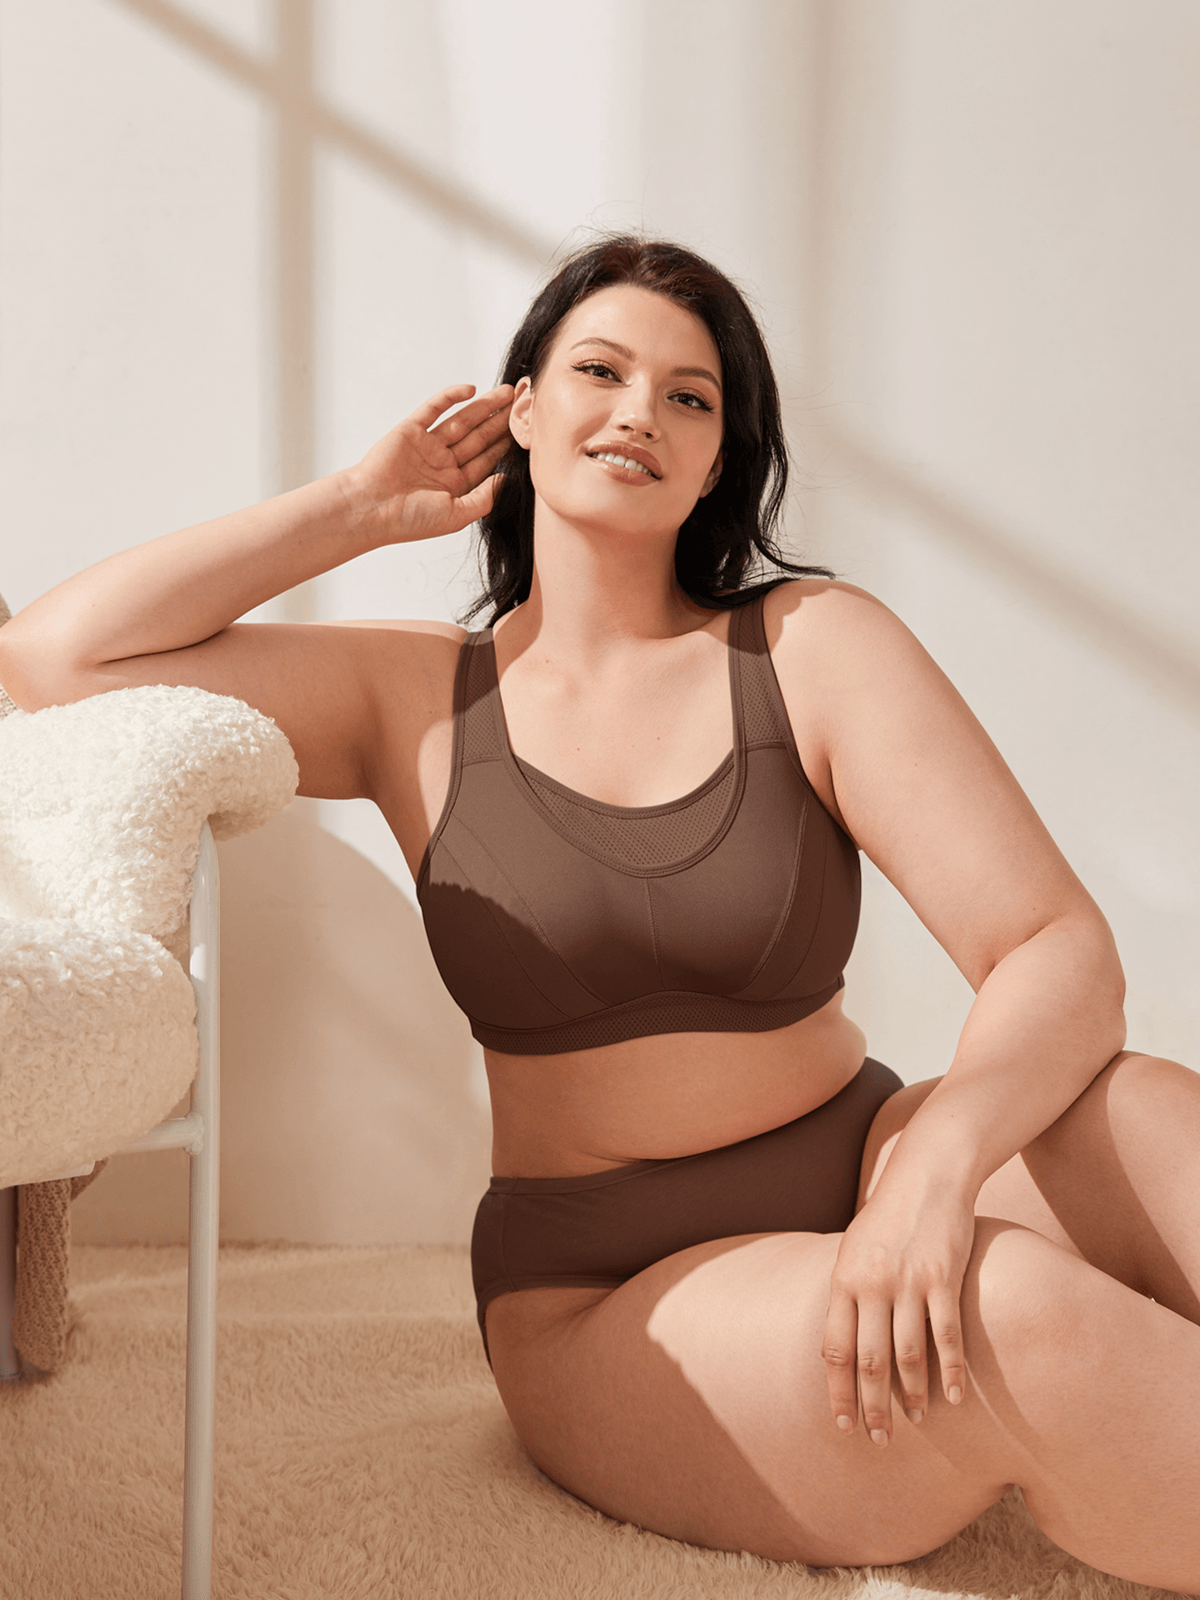 Wholesale bra 42 size For Supportive Underwear 